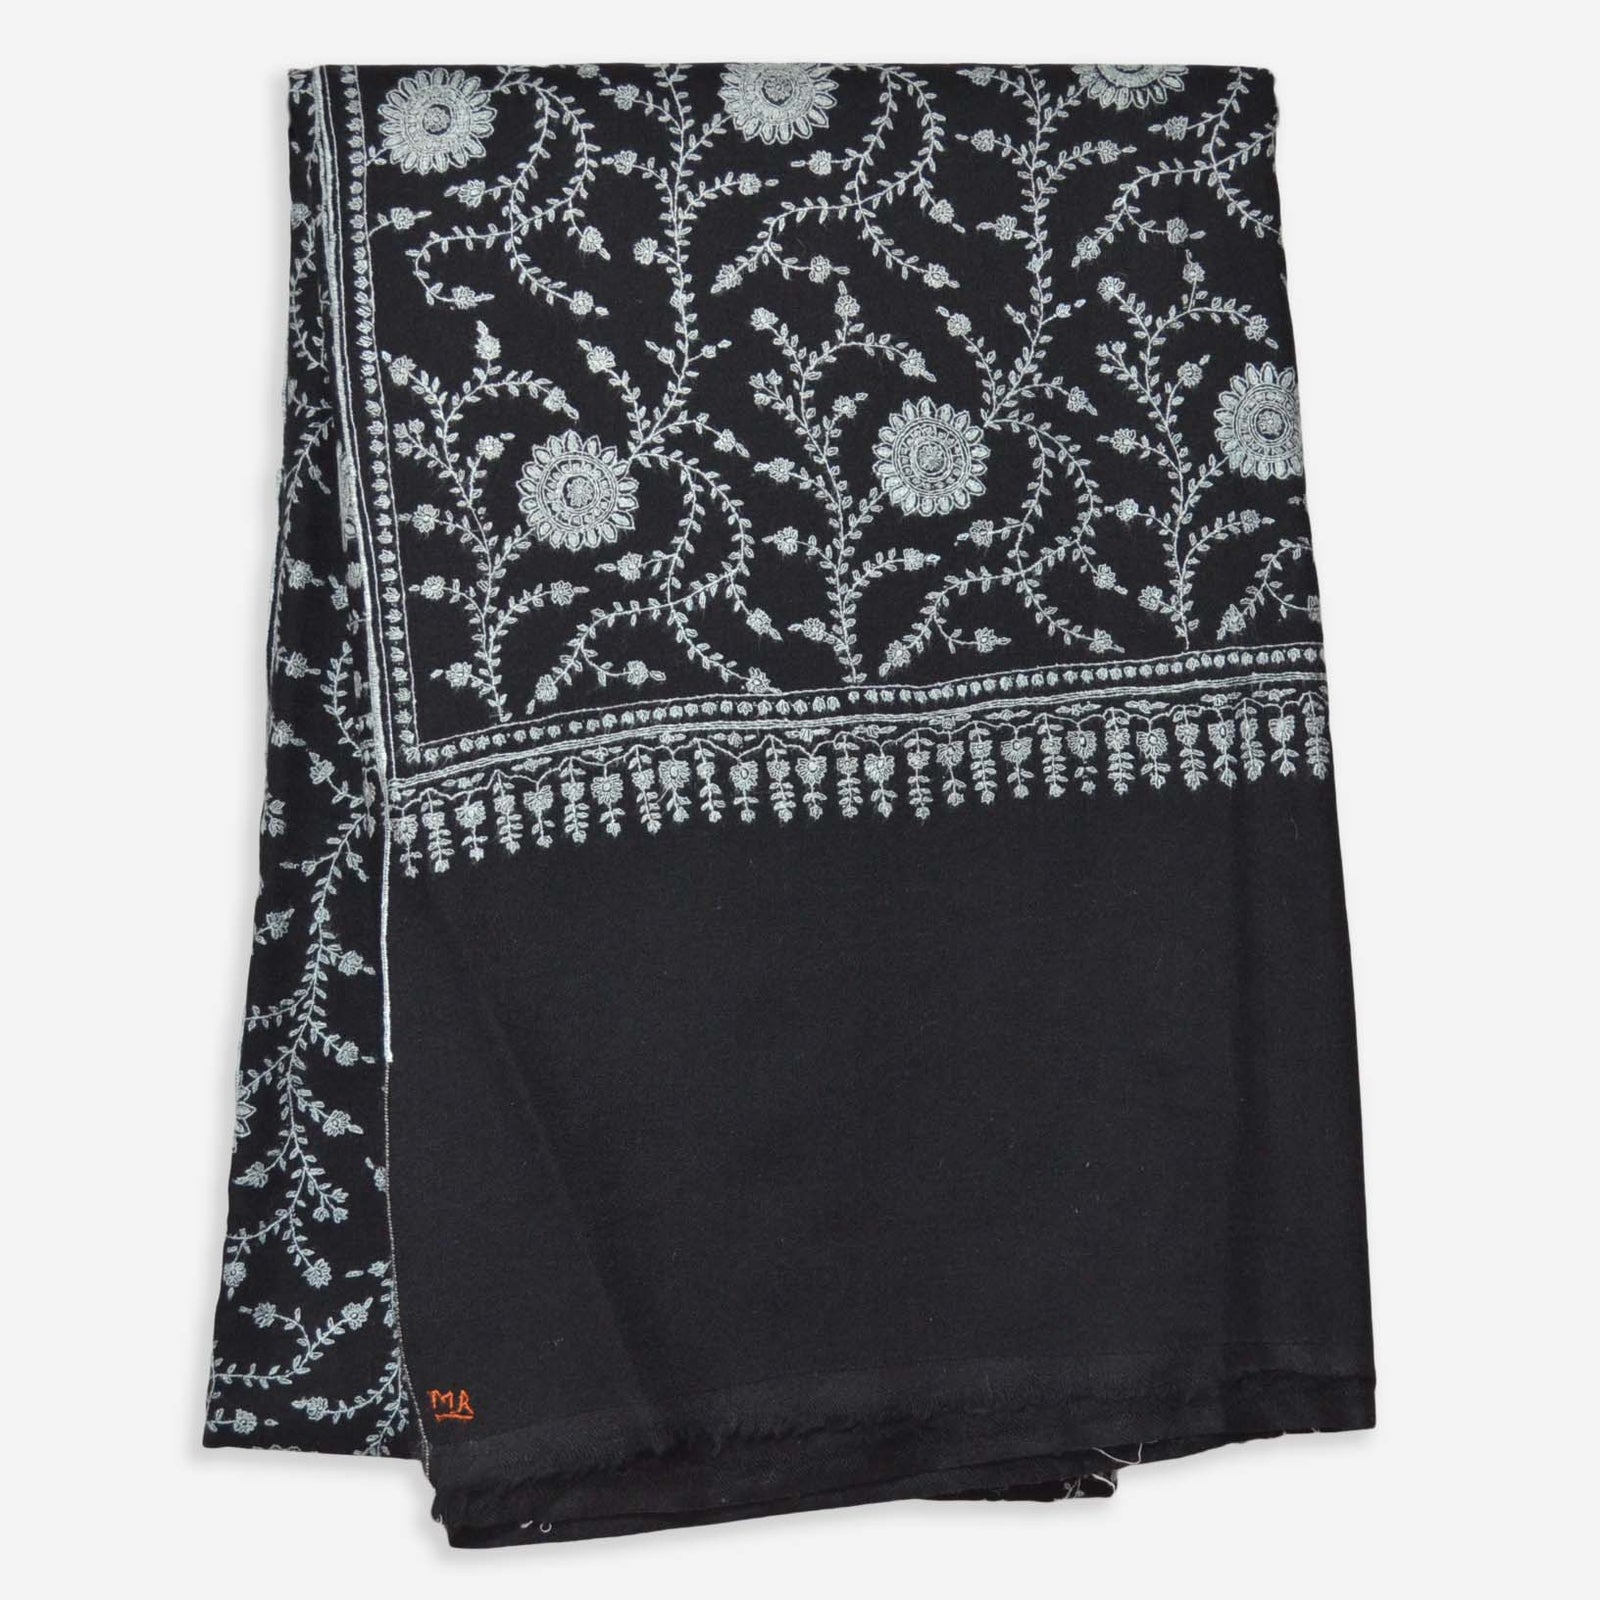 Splendid needle embroidery all over black cashmere pashmina shawl